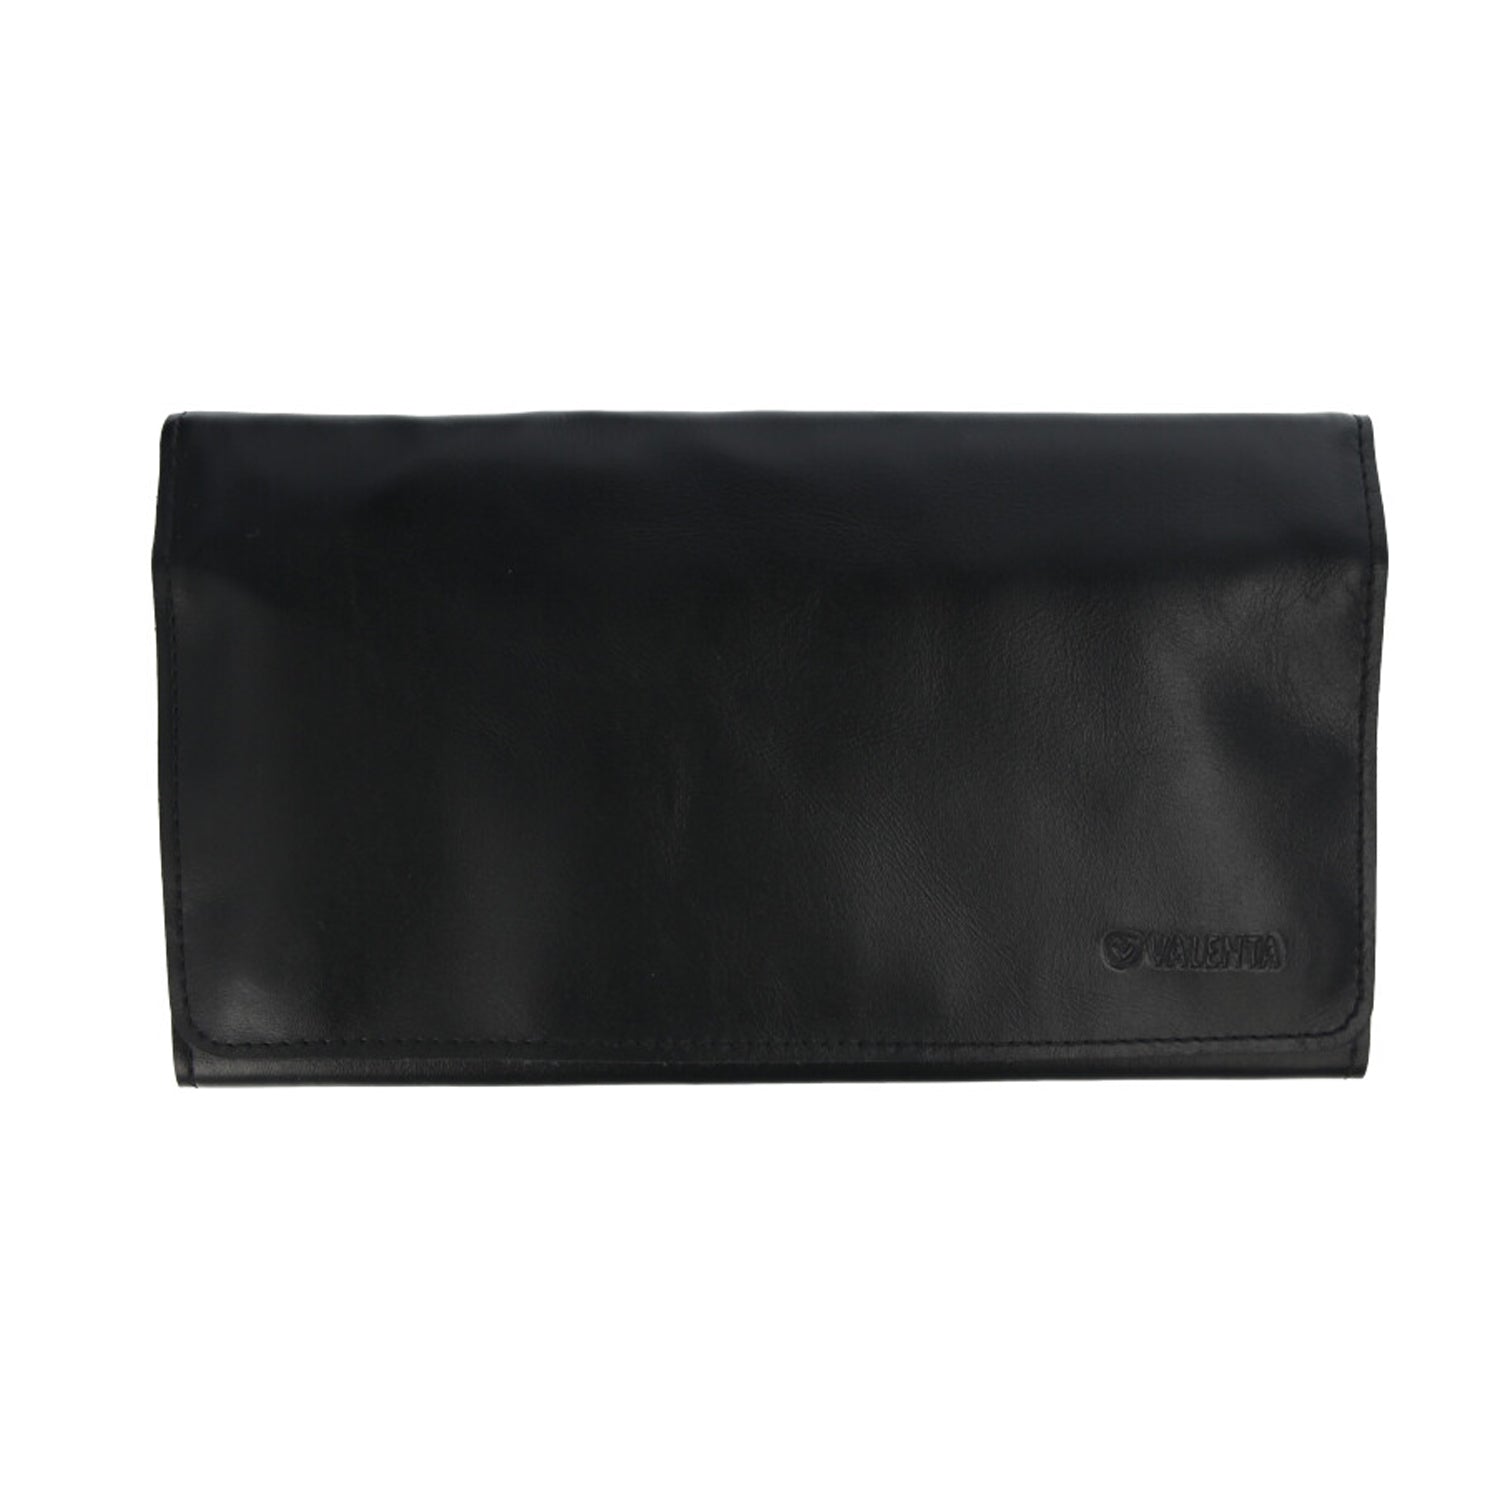 Bag Faraday Phone Wallet Luxury Leather Black